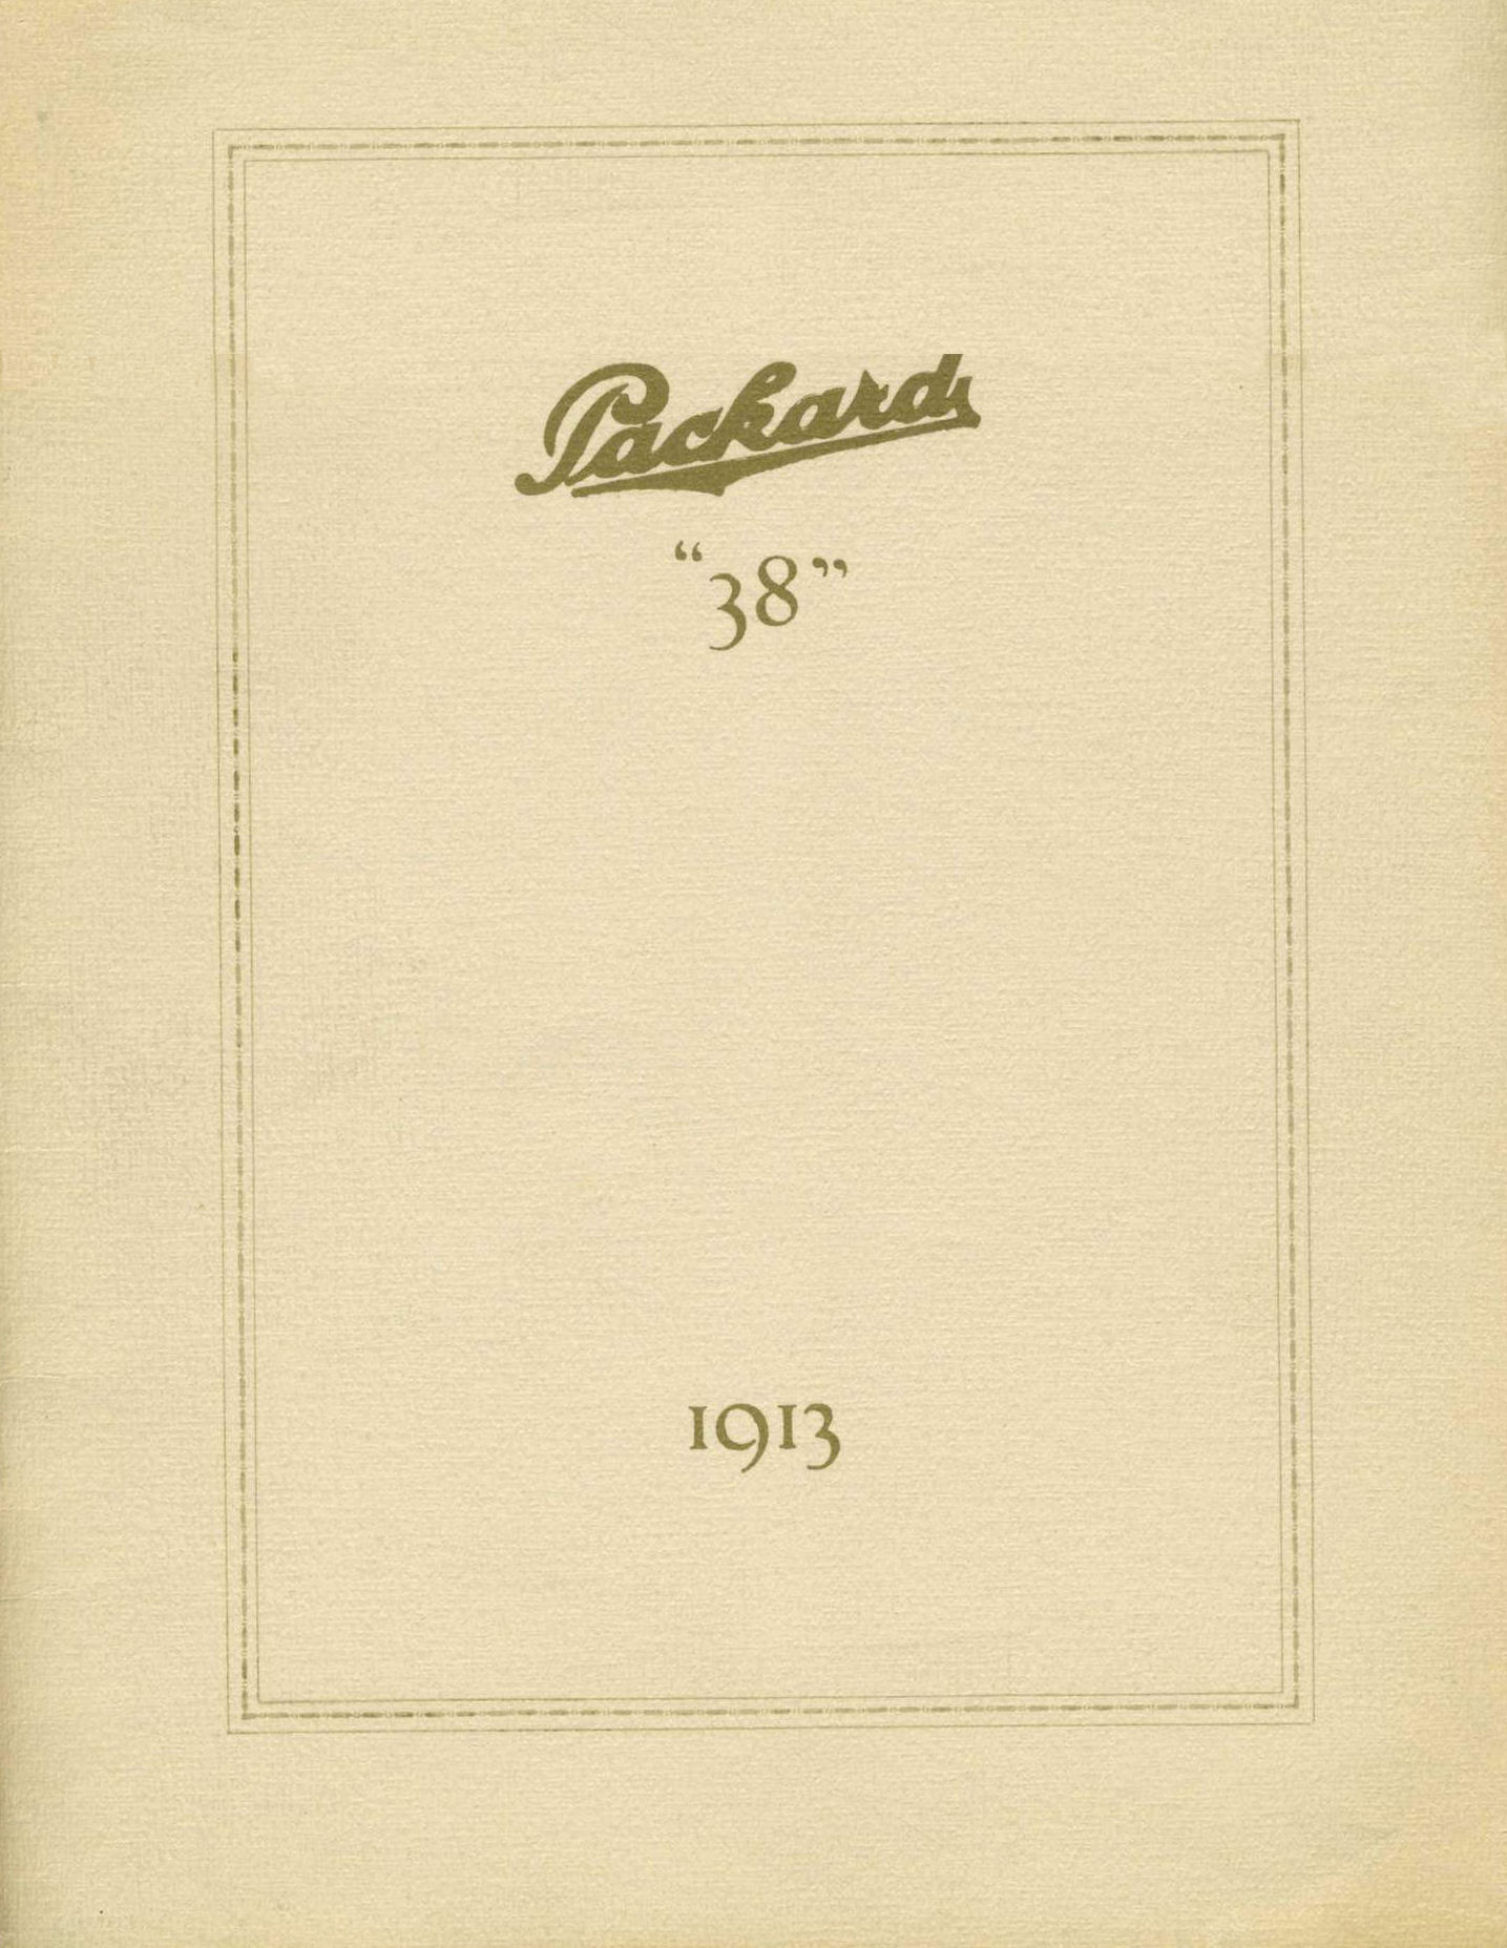 1913 Packard 38 Brochure-00